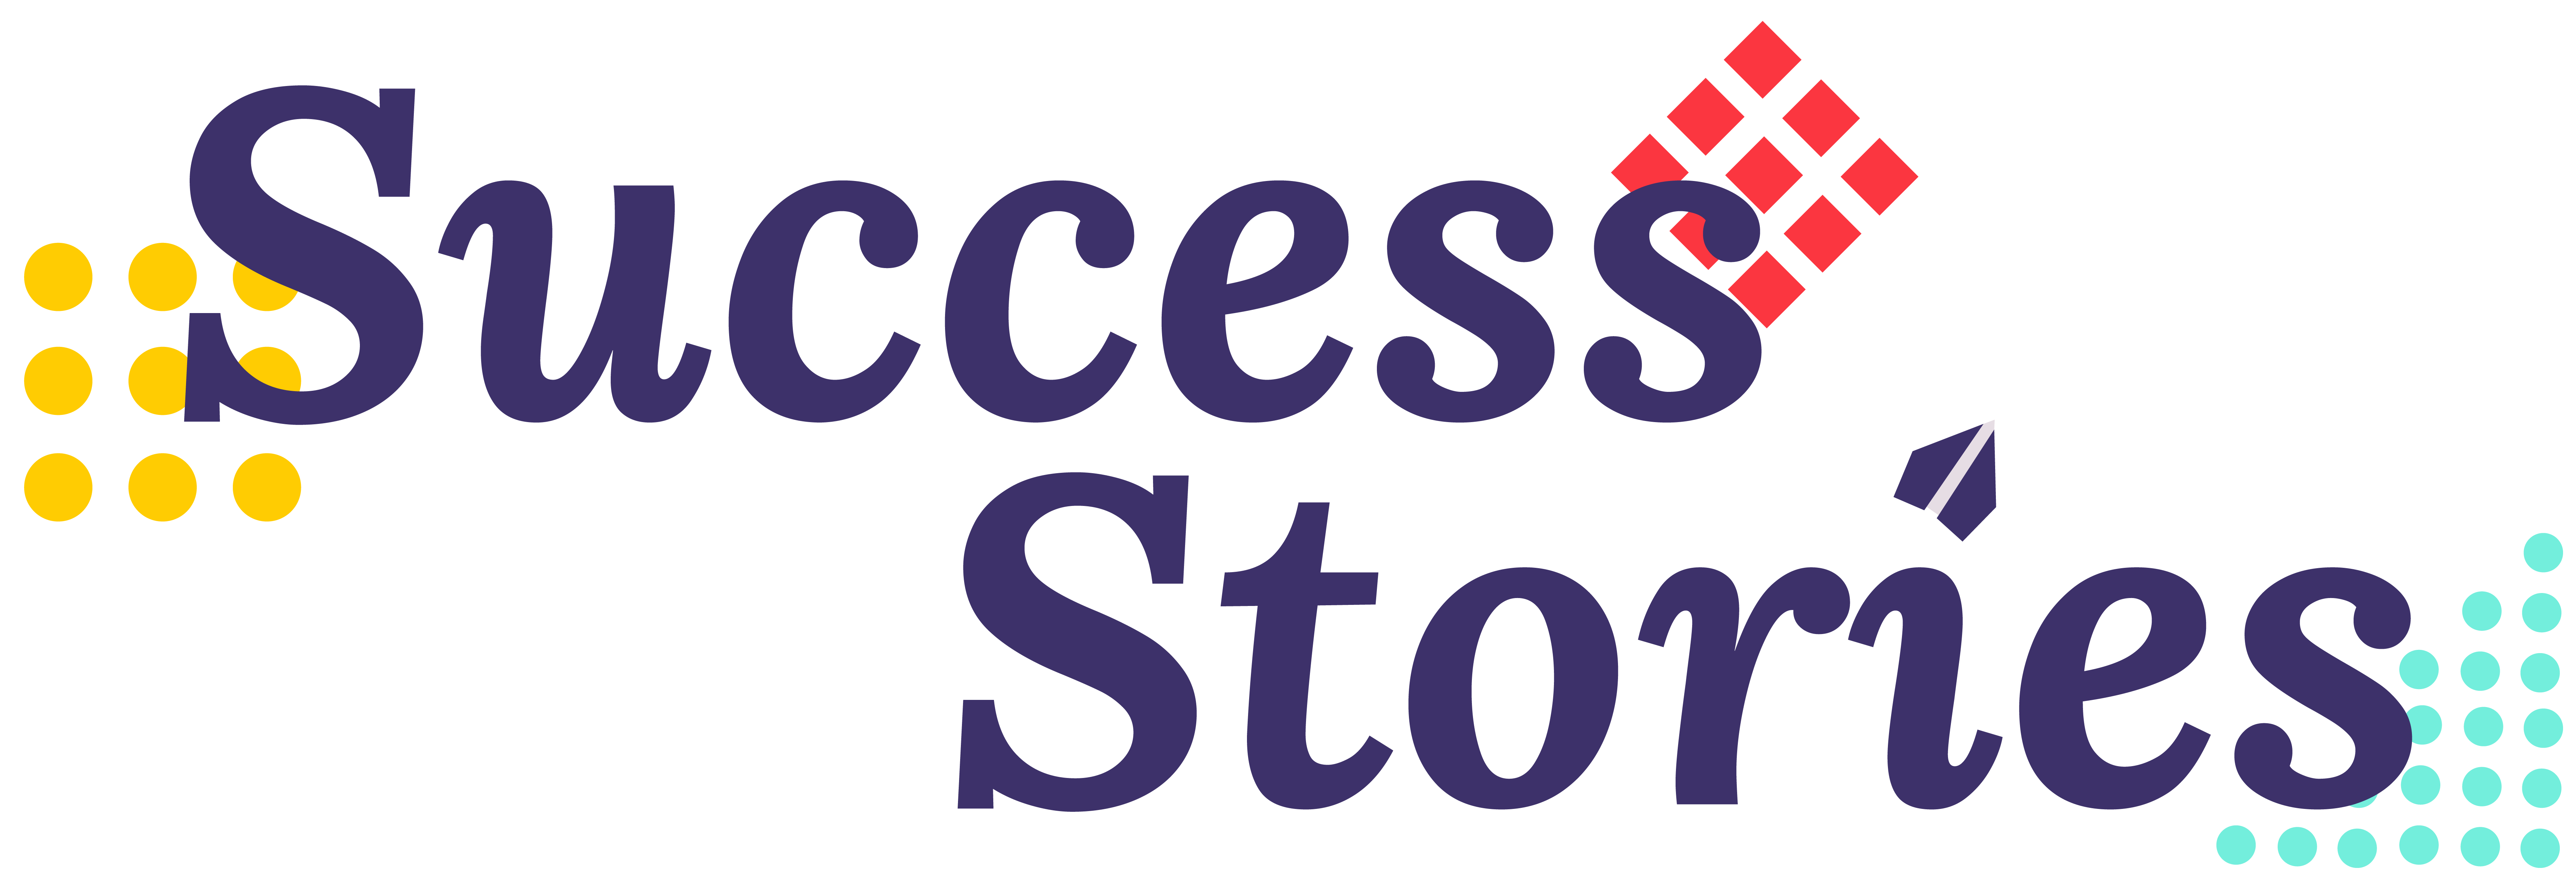 Success Stories logo